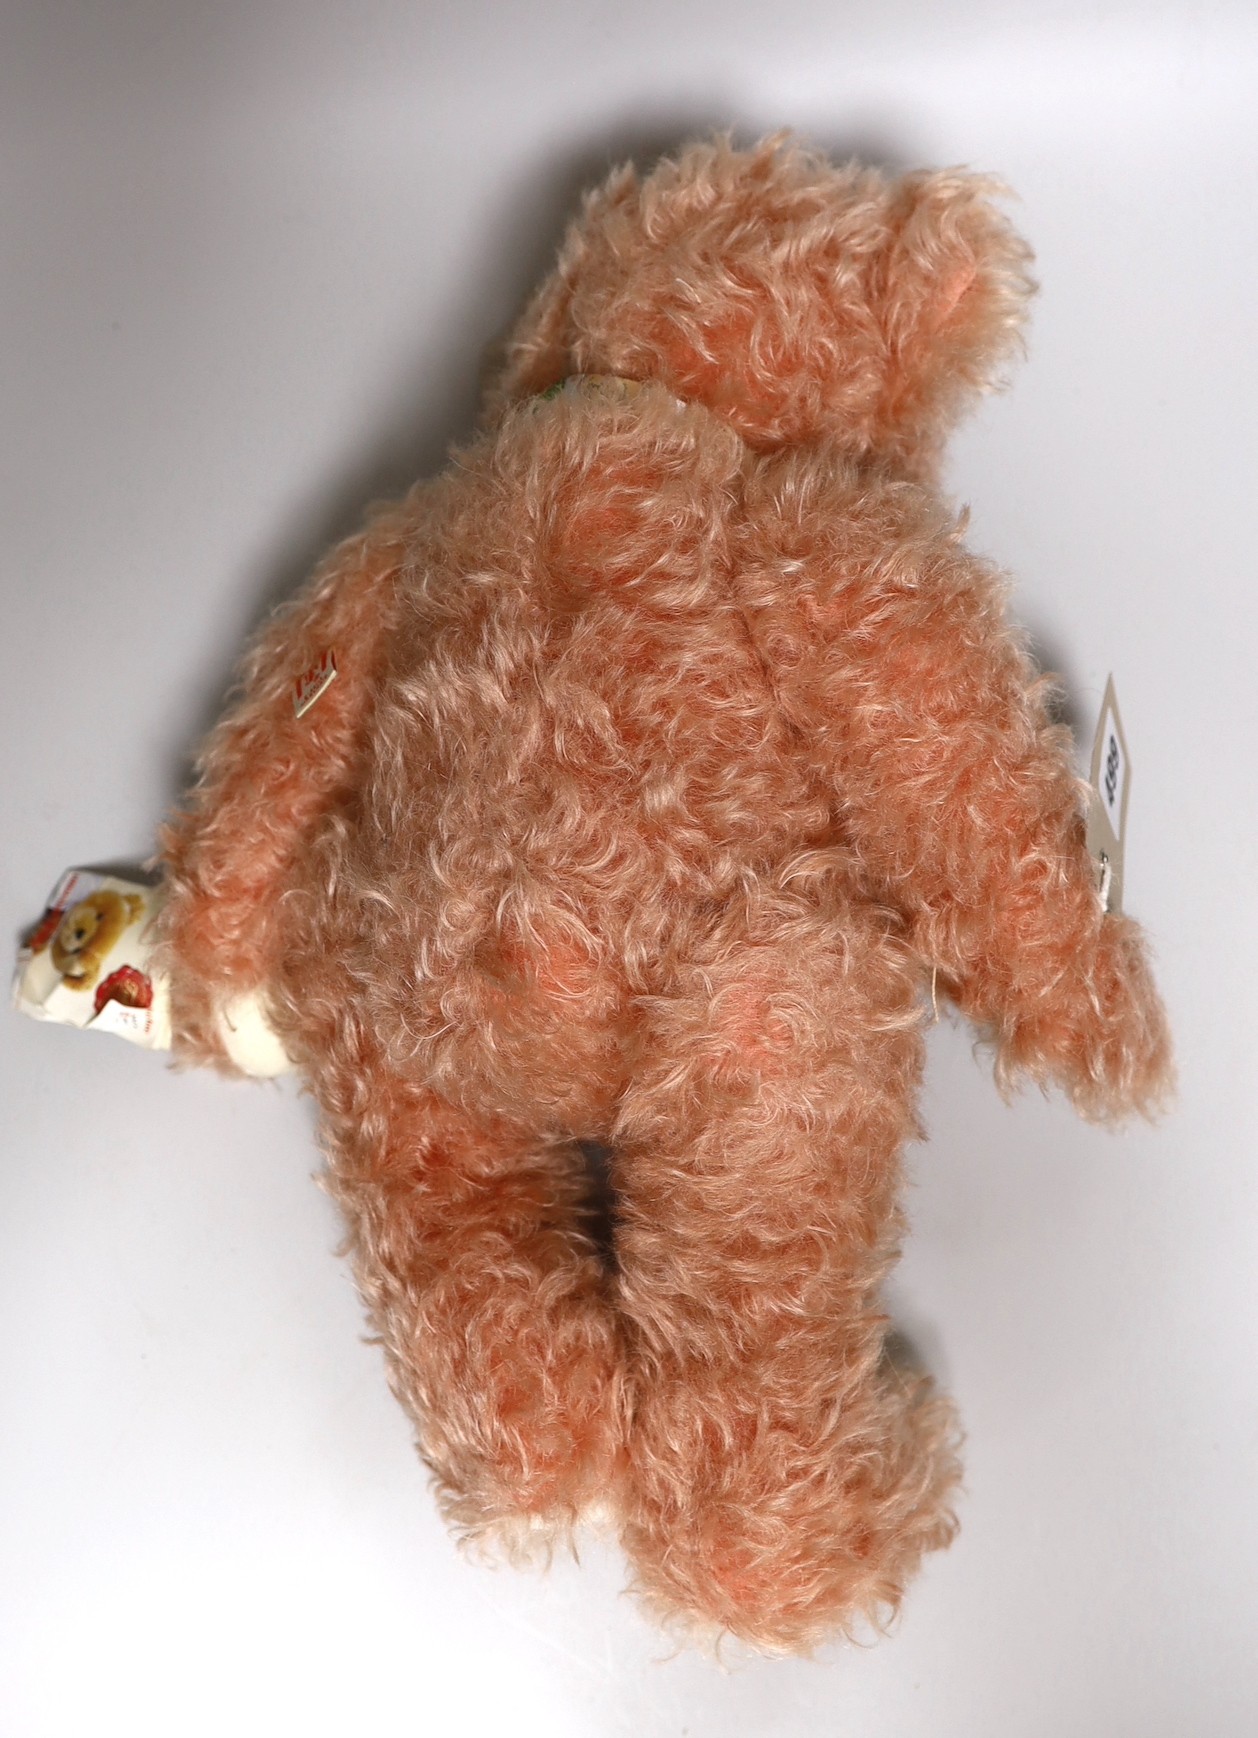 An Hermann ‘English Rose’ Teddy bear, G-Rumpy Bears ‘Emerson’, and a Deans blonde plush Teddy bear